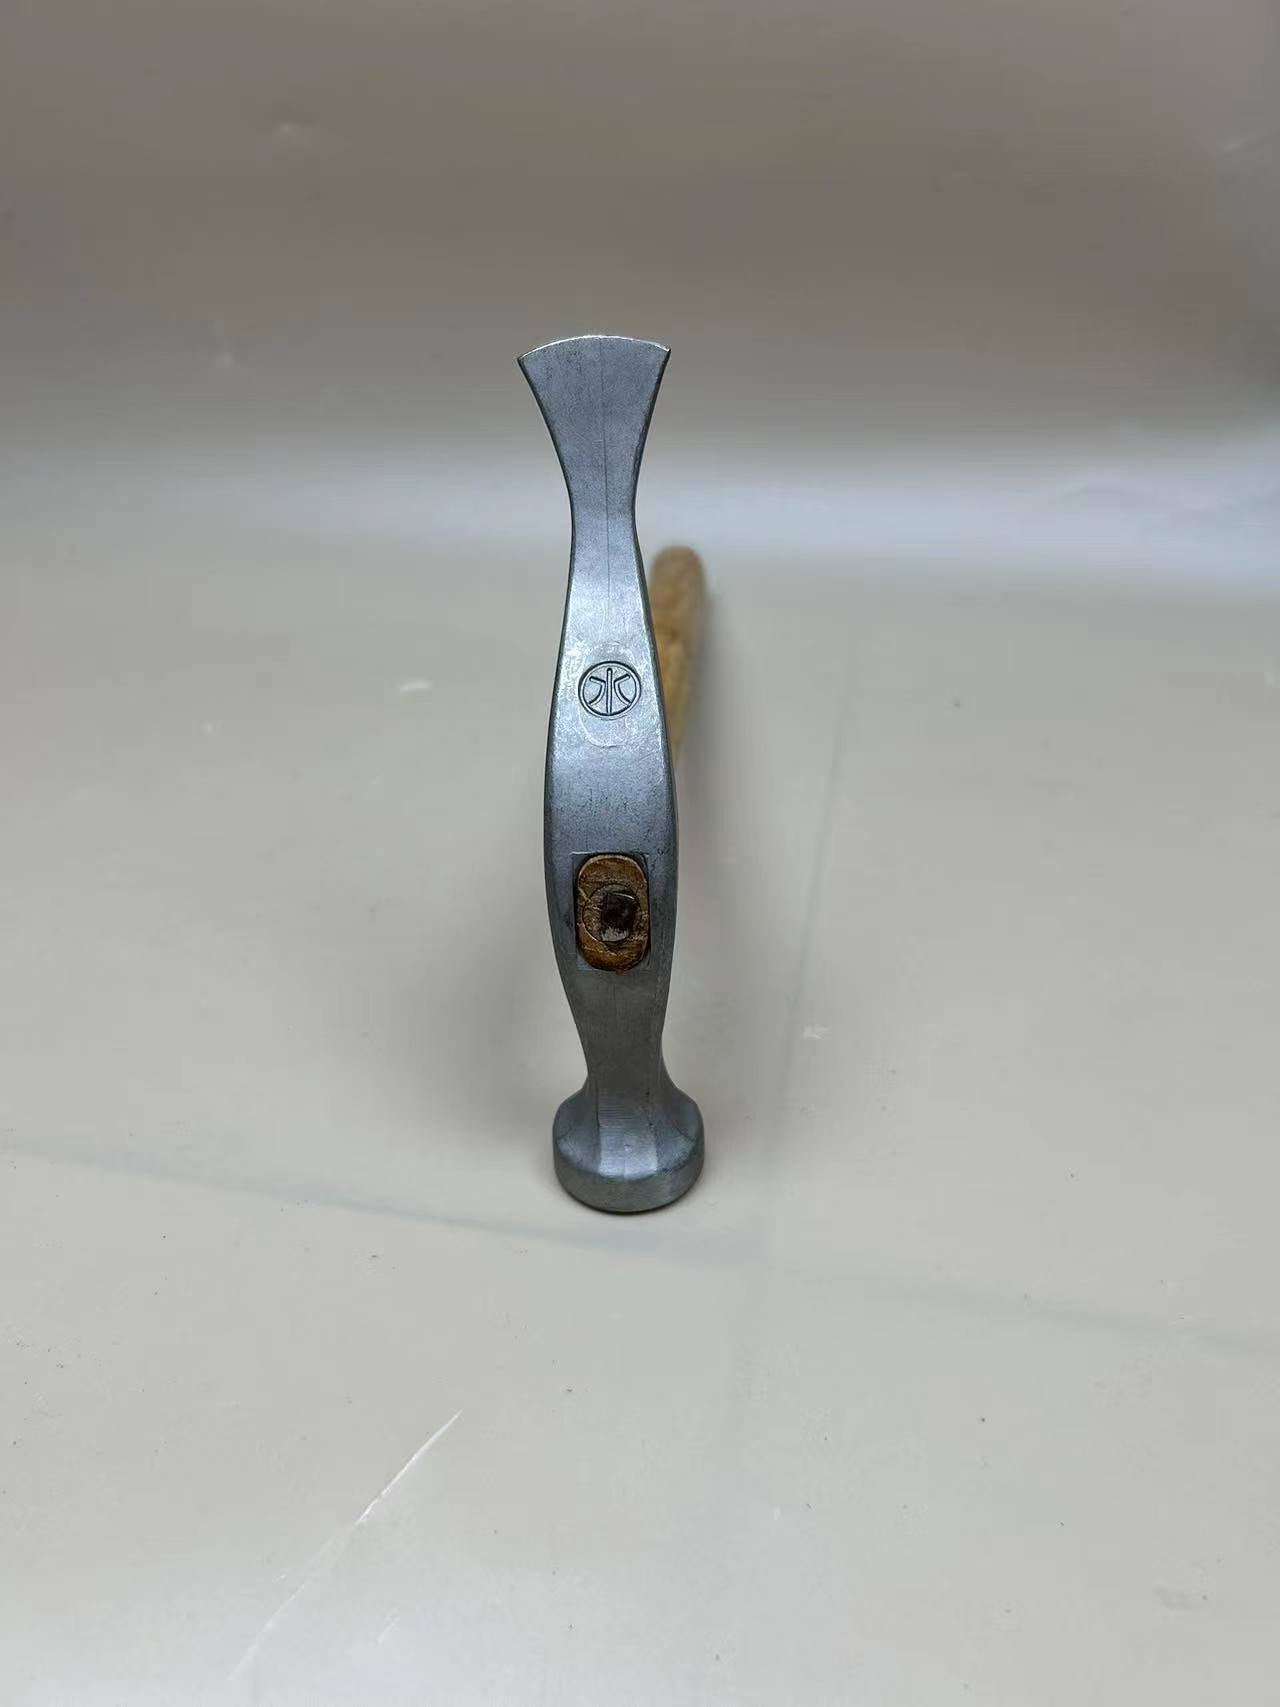 Shoemaker hammer 344.3 gram, Silver